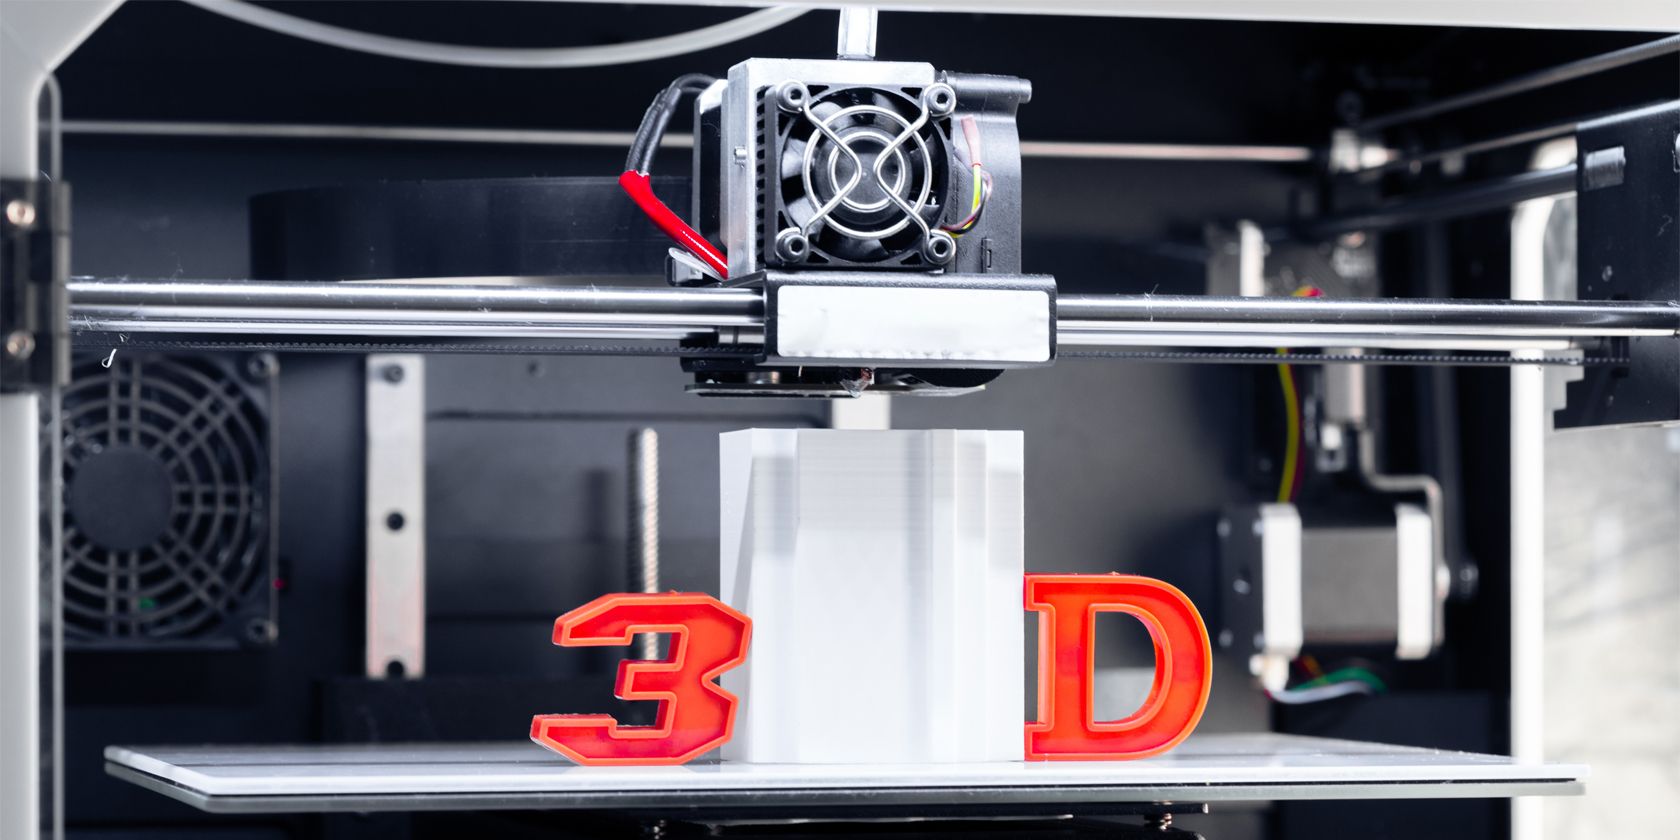 3D text printed on a 3D printer